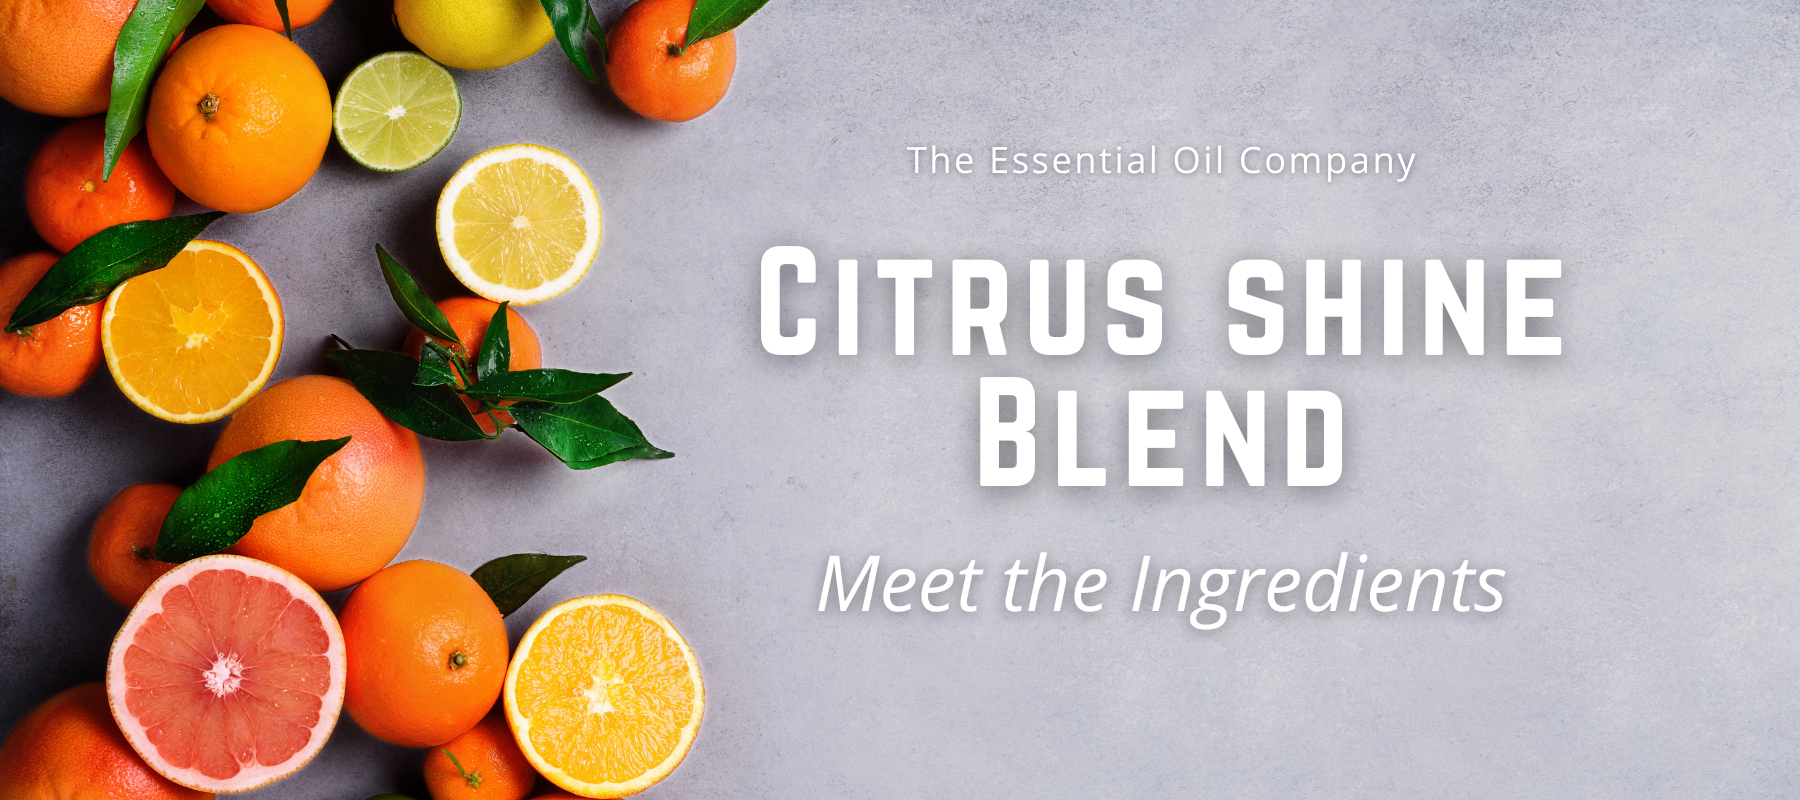 Citrus Shine Blend: Meet the Ingredients